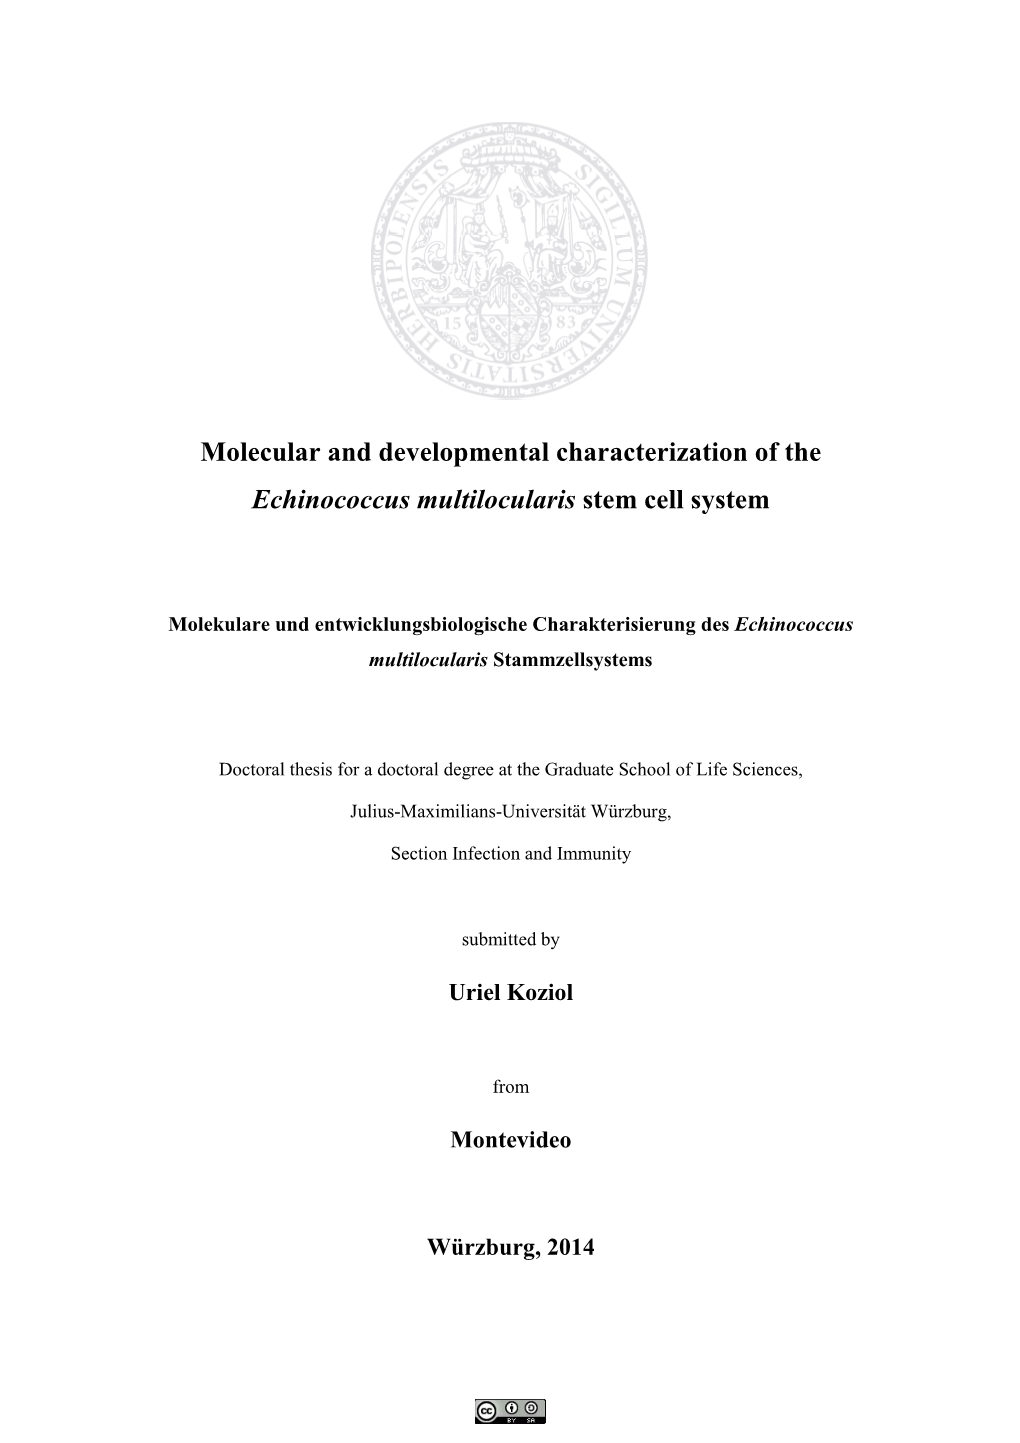 Uriel Koziol Dissertation Final Print Version